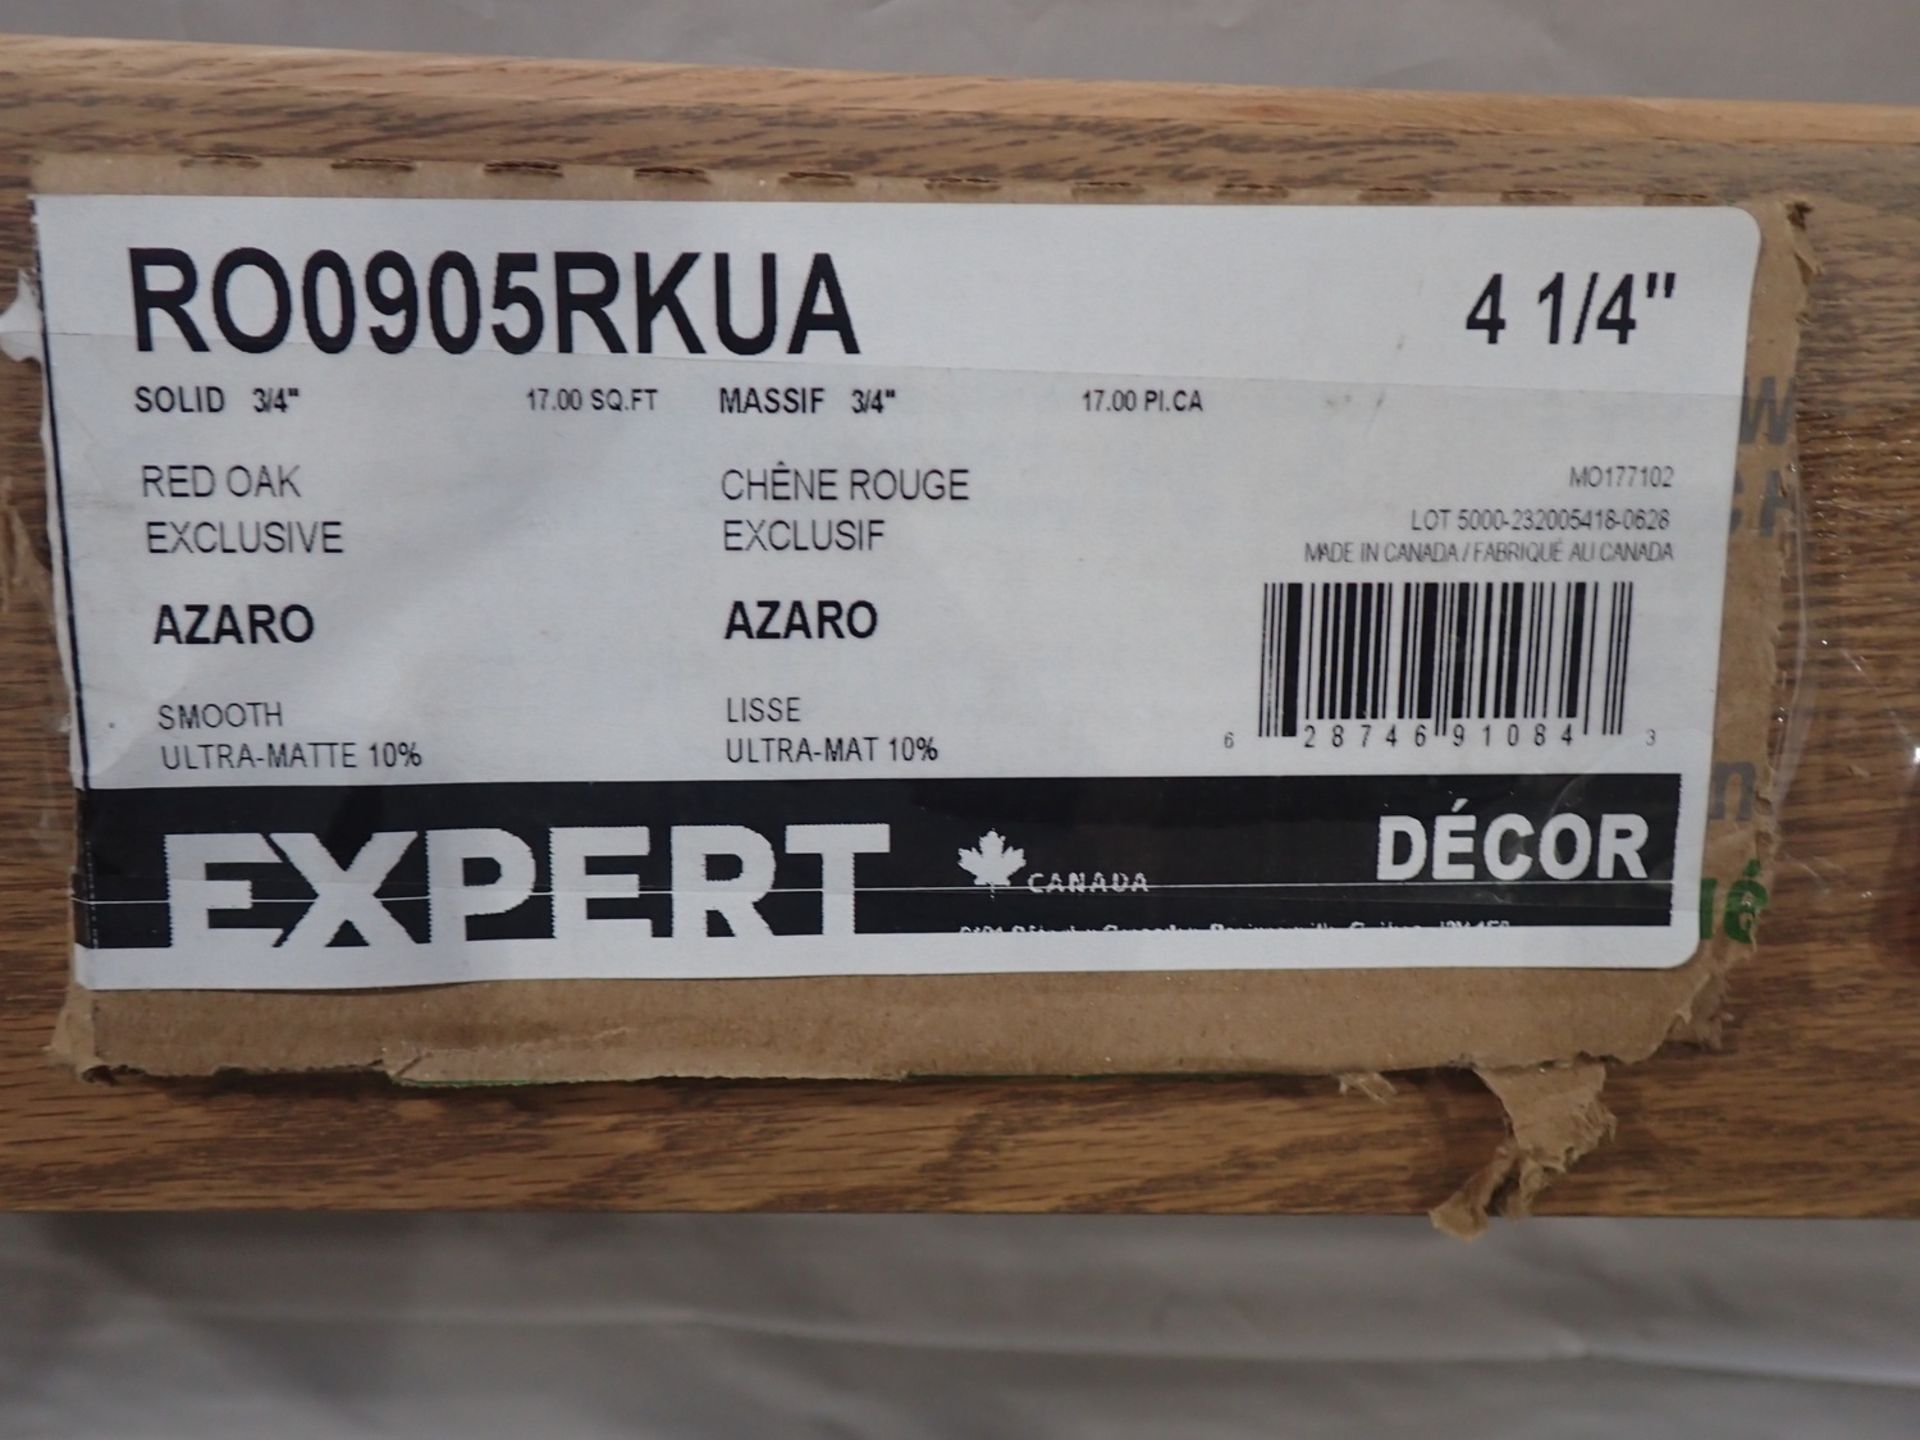 BOXES - RED OAK AZARO EXCLUSIVE 4.25" X 3/4" SOLID HARDWOOD FLOORING (17 SQFT/BOX) - Image 2 of 3